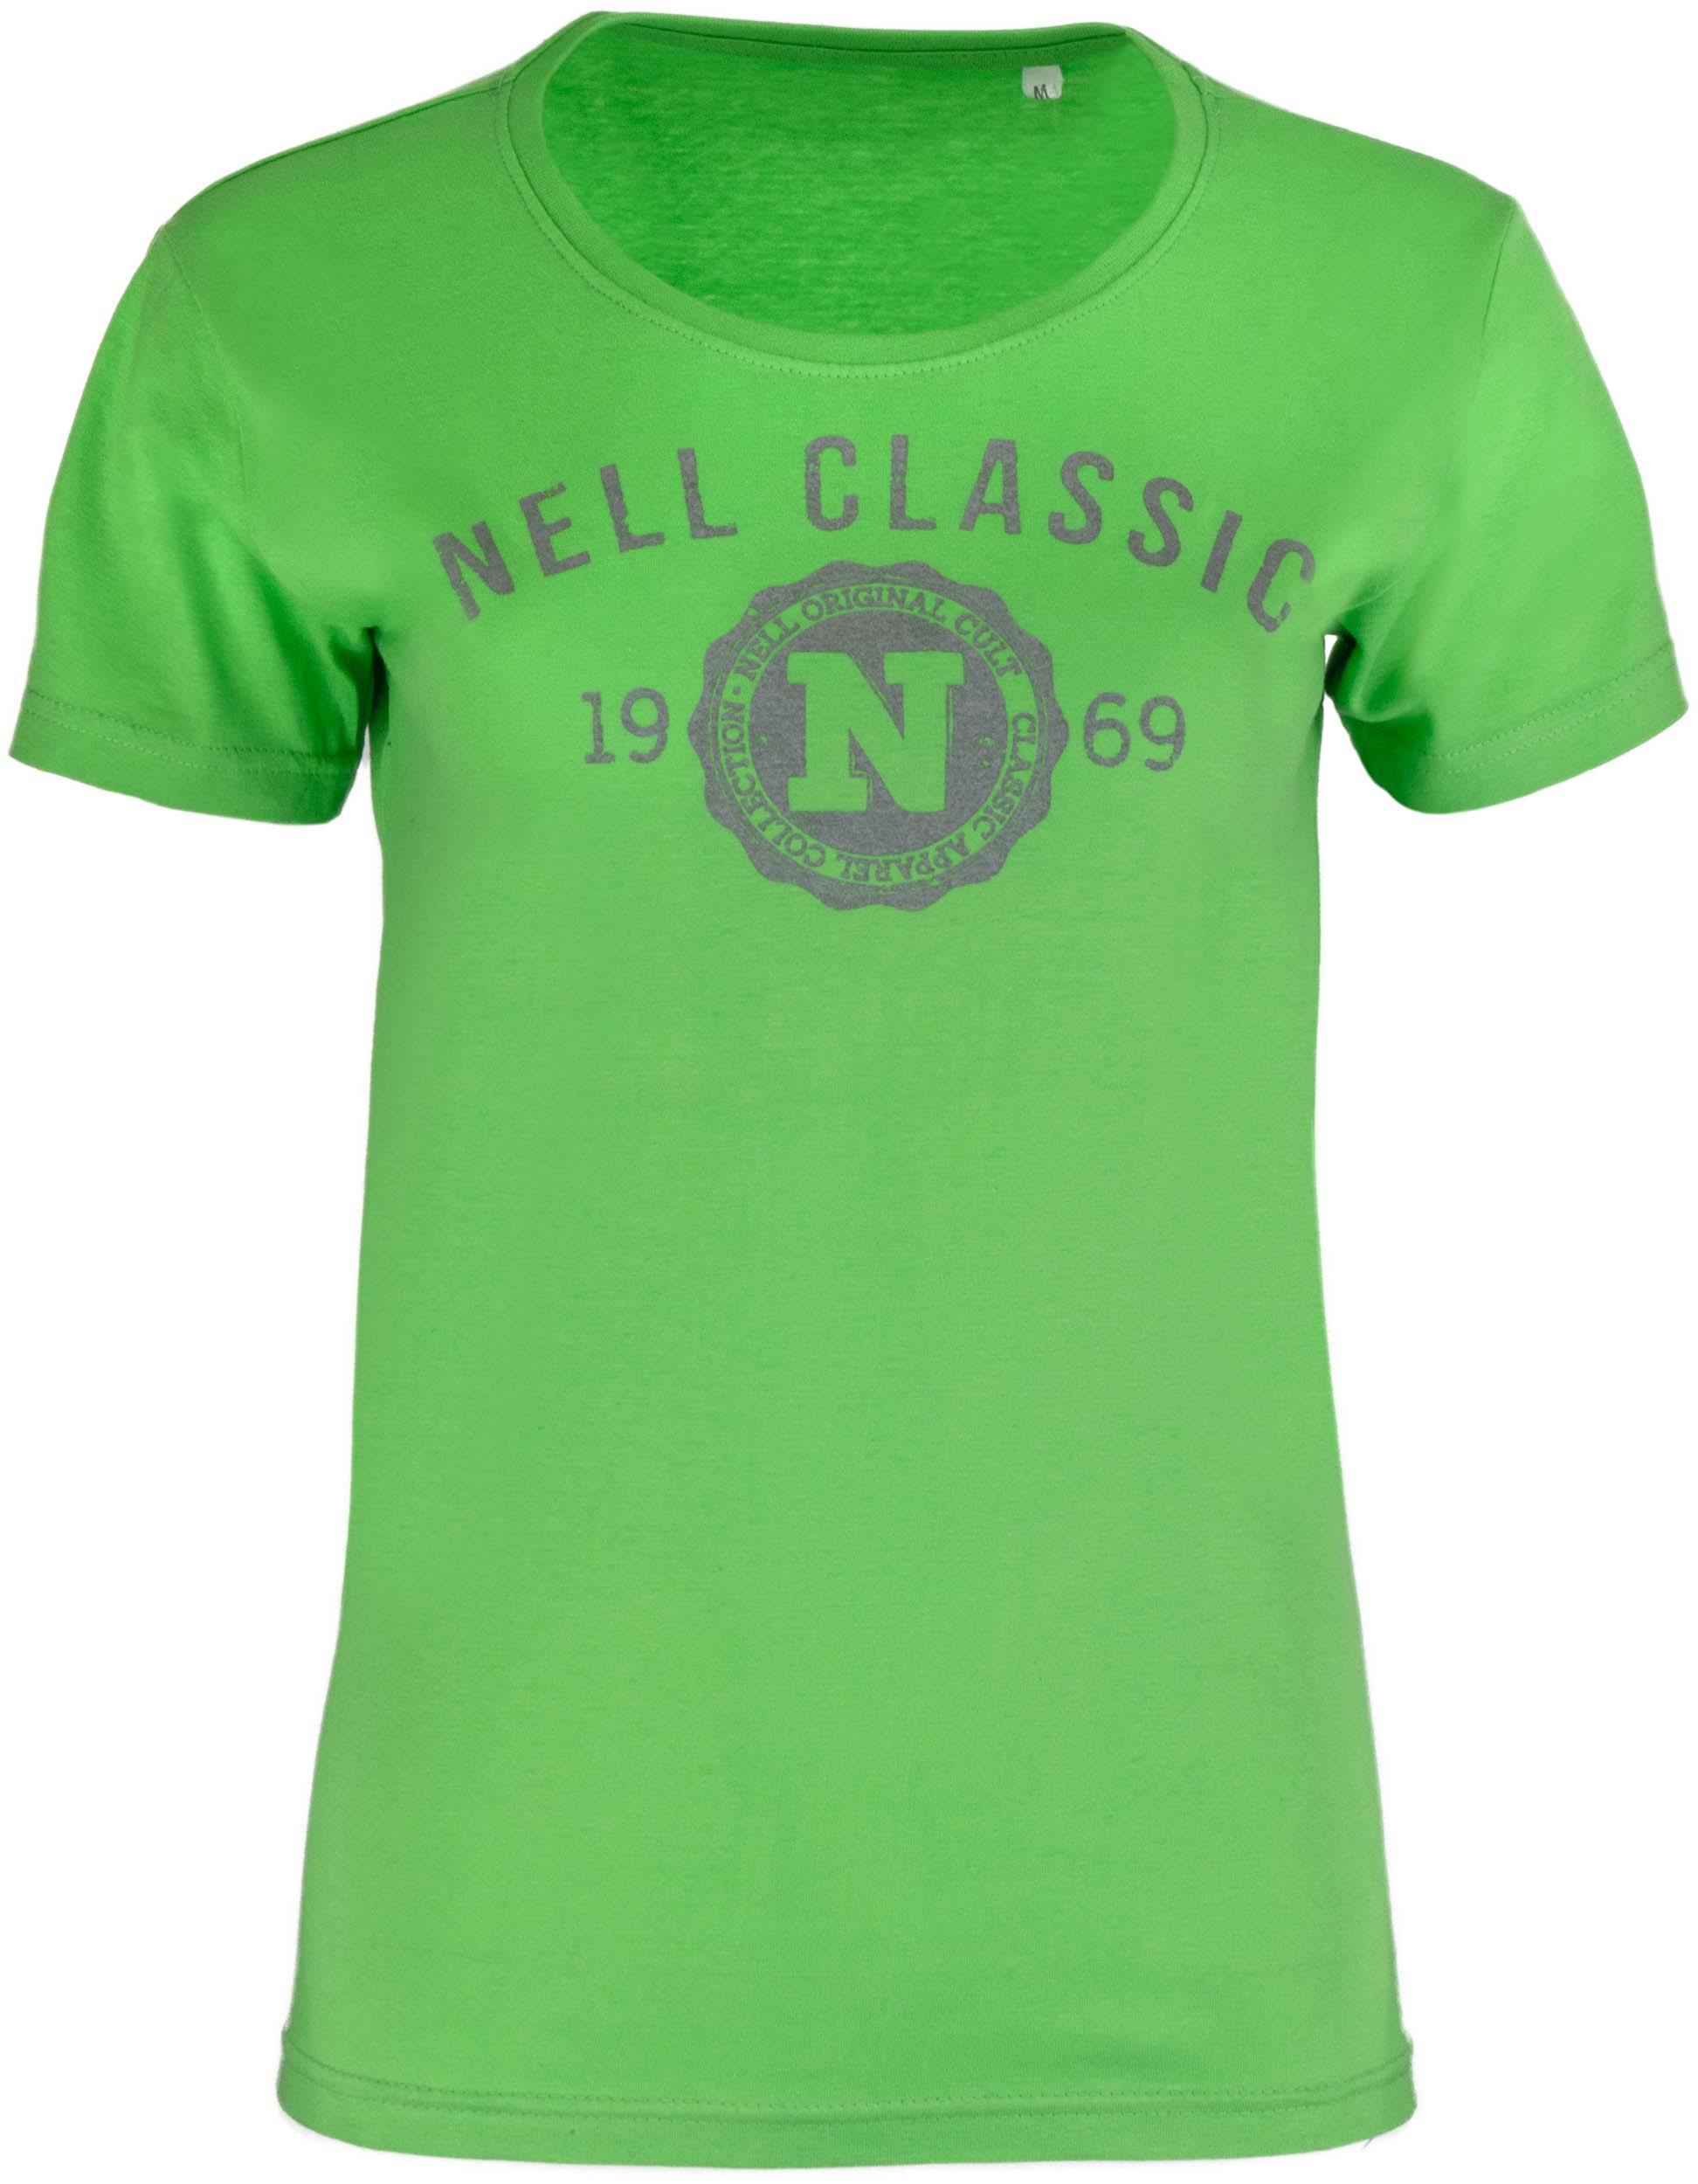 Dámské triko Nell Classic|XS